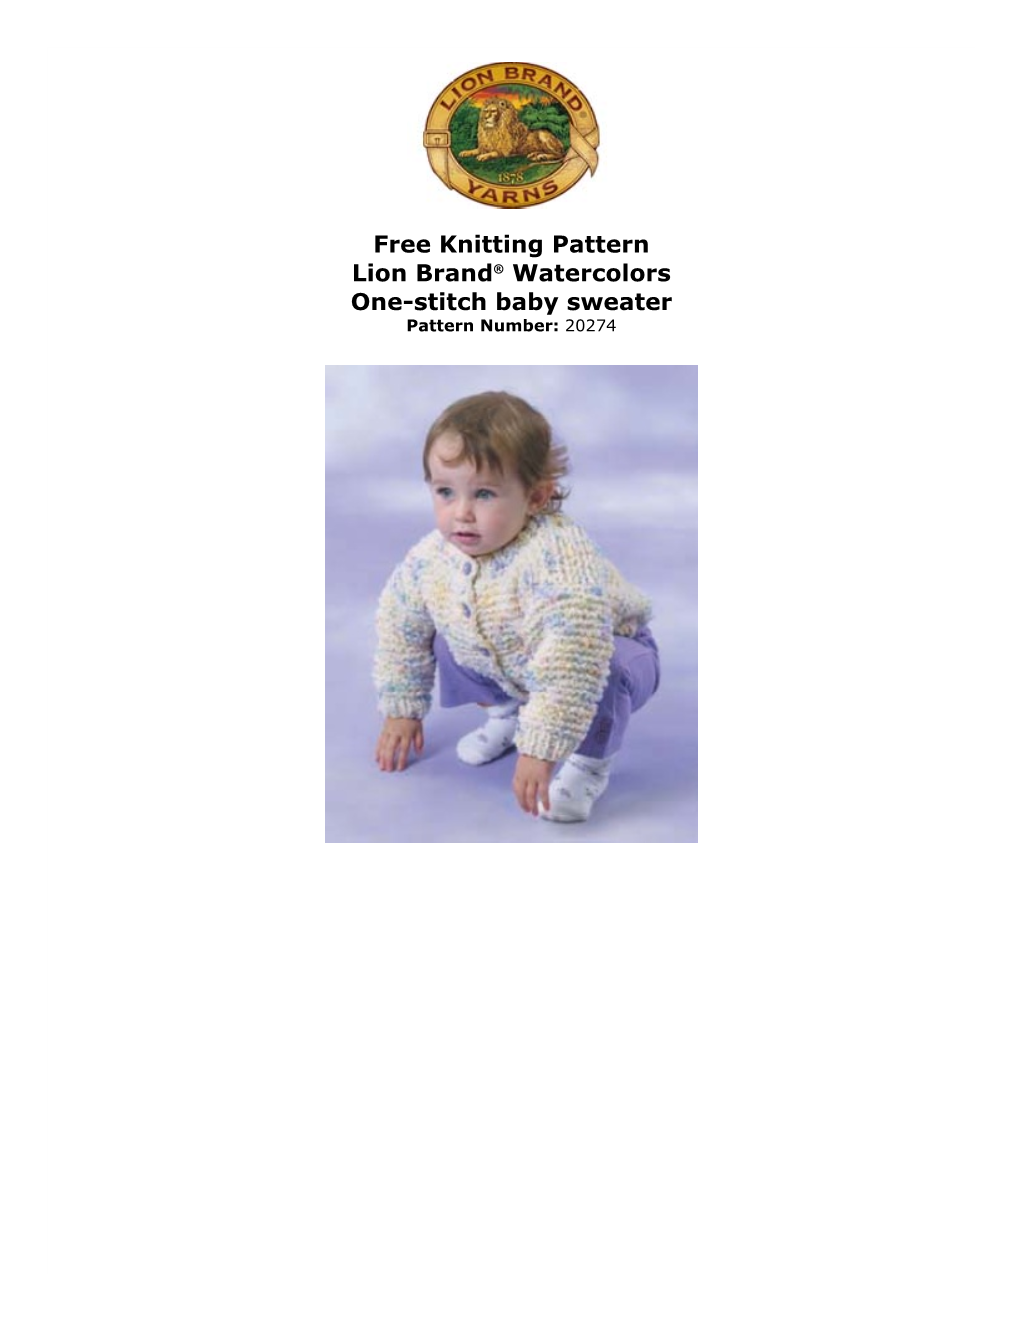 Free Knitting Pattern Lion Brand® Watercolors Onestitch Baby Sweater